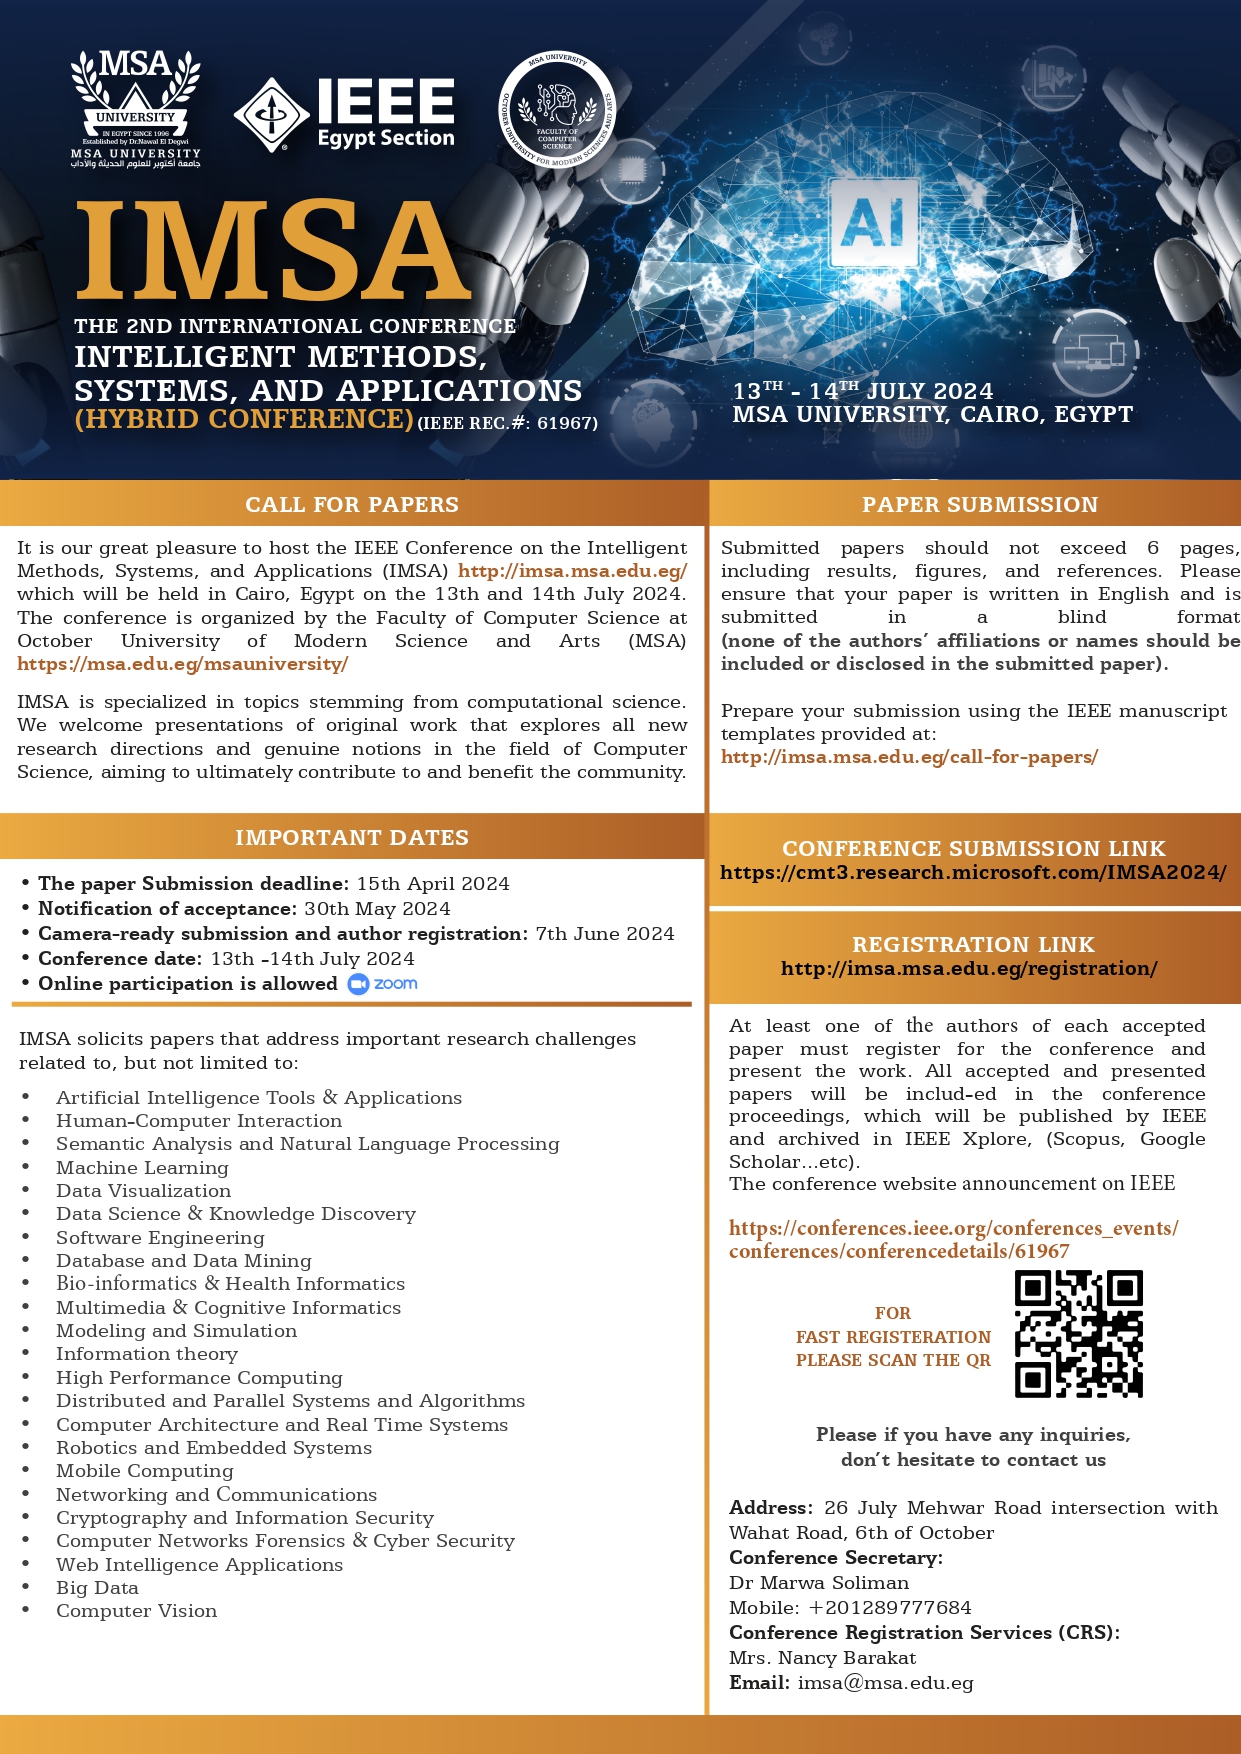 IMSA Event Digital Flyer